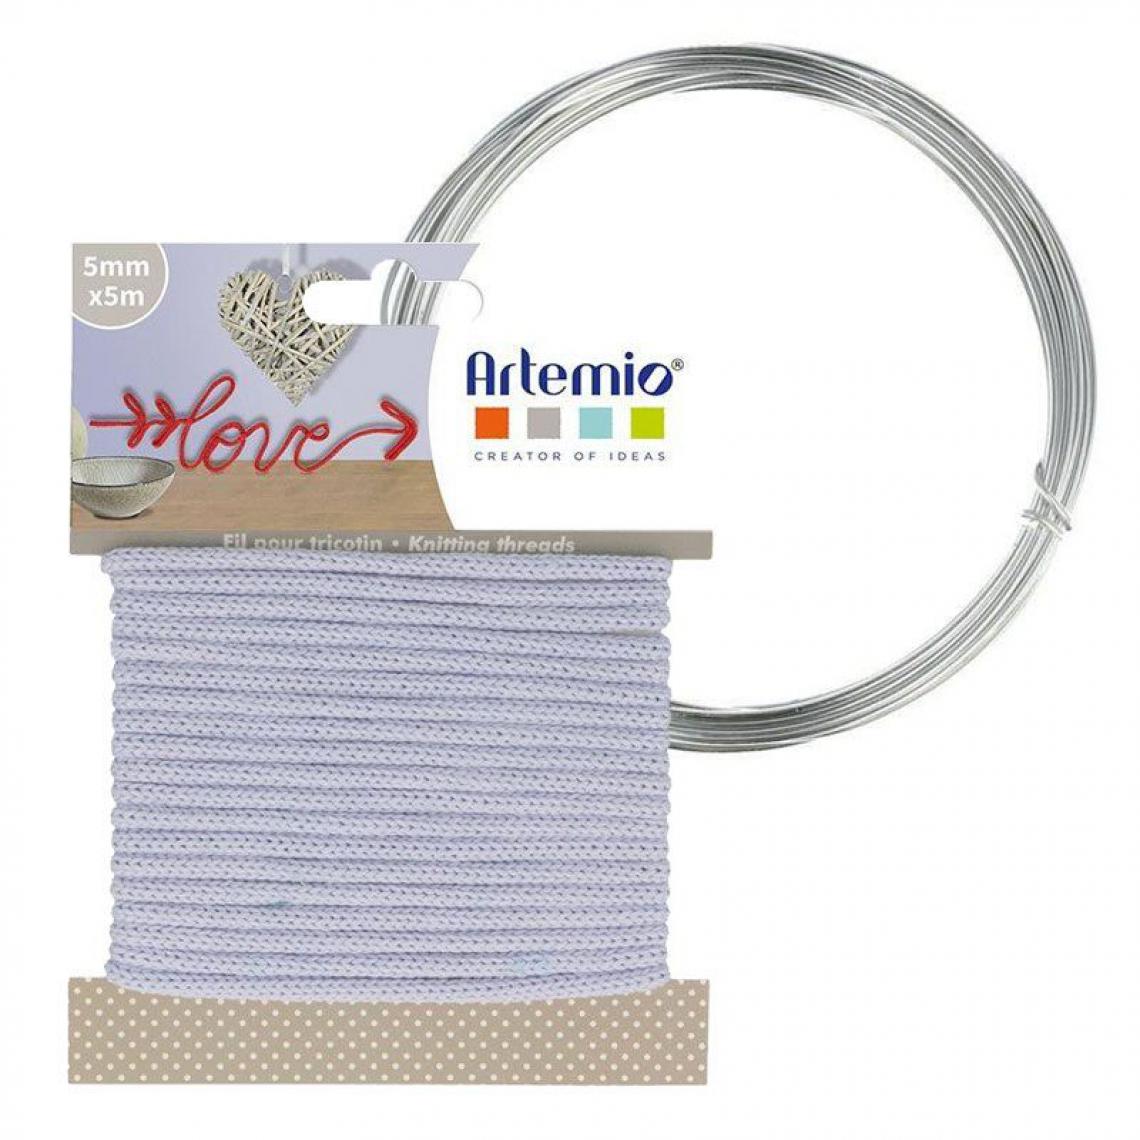 Artemio - Fil à tricotin lilas 5 mm x 5 m + fil d'aluminium - Dessin et peinture